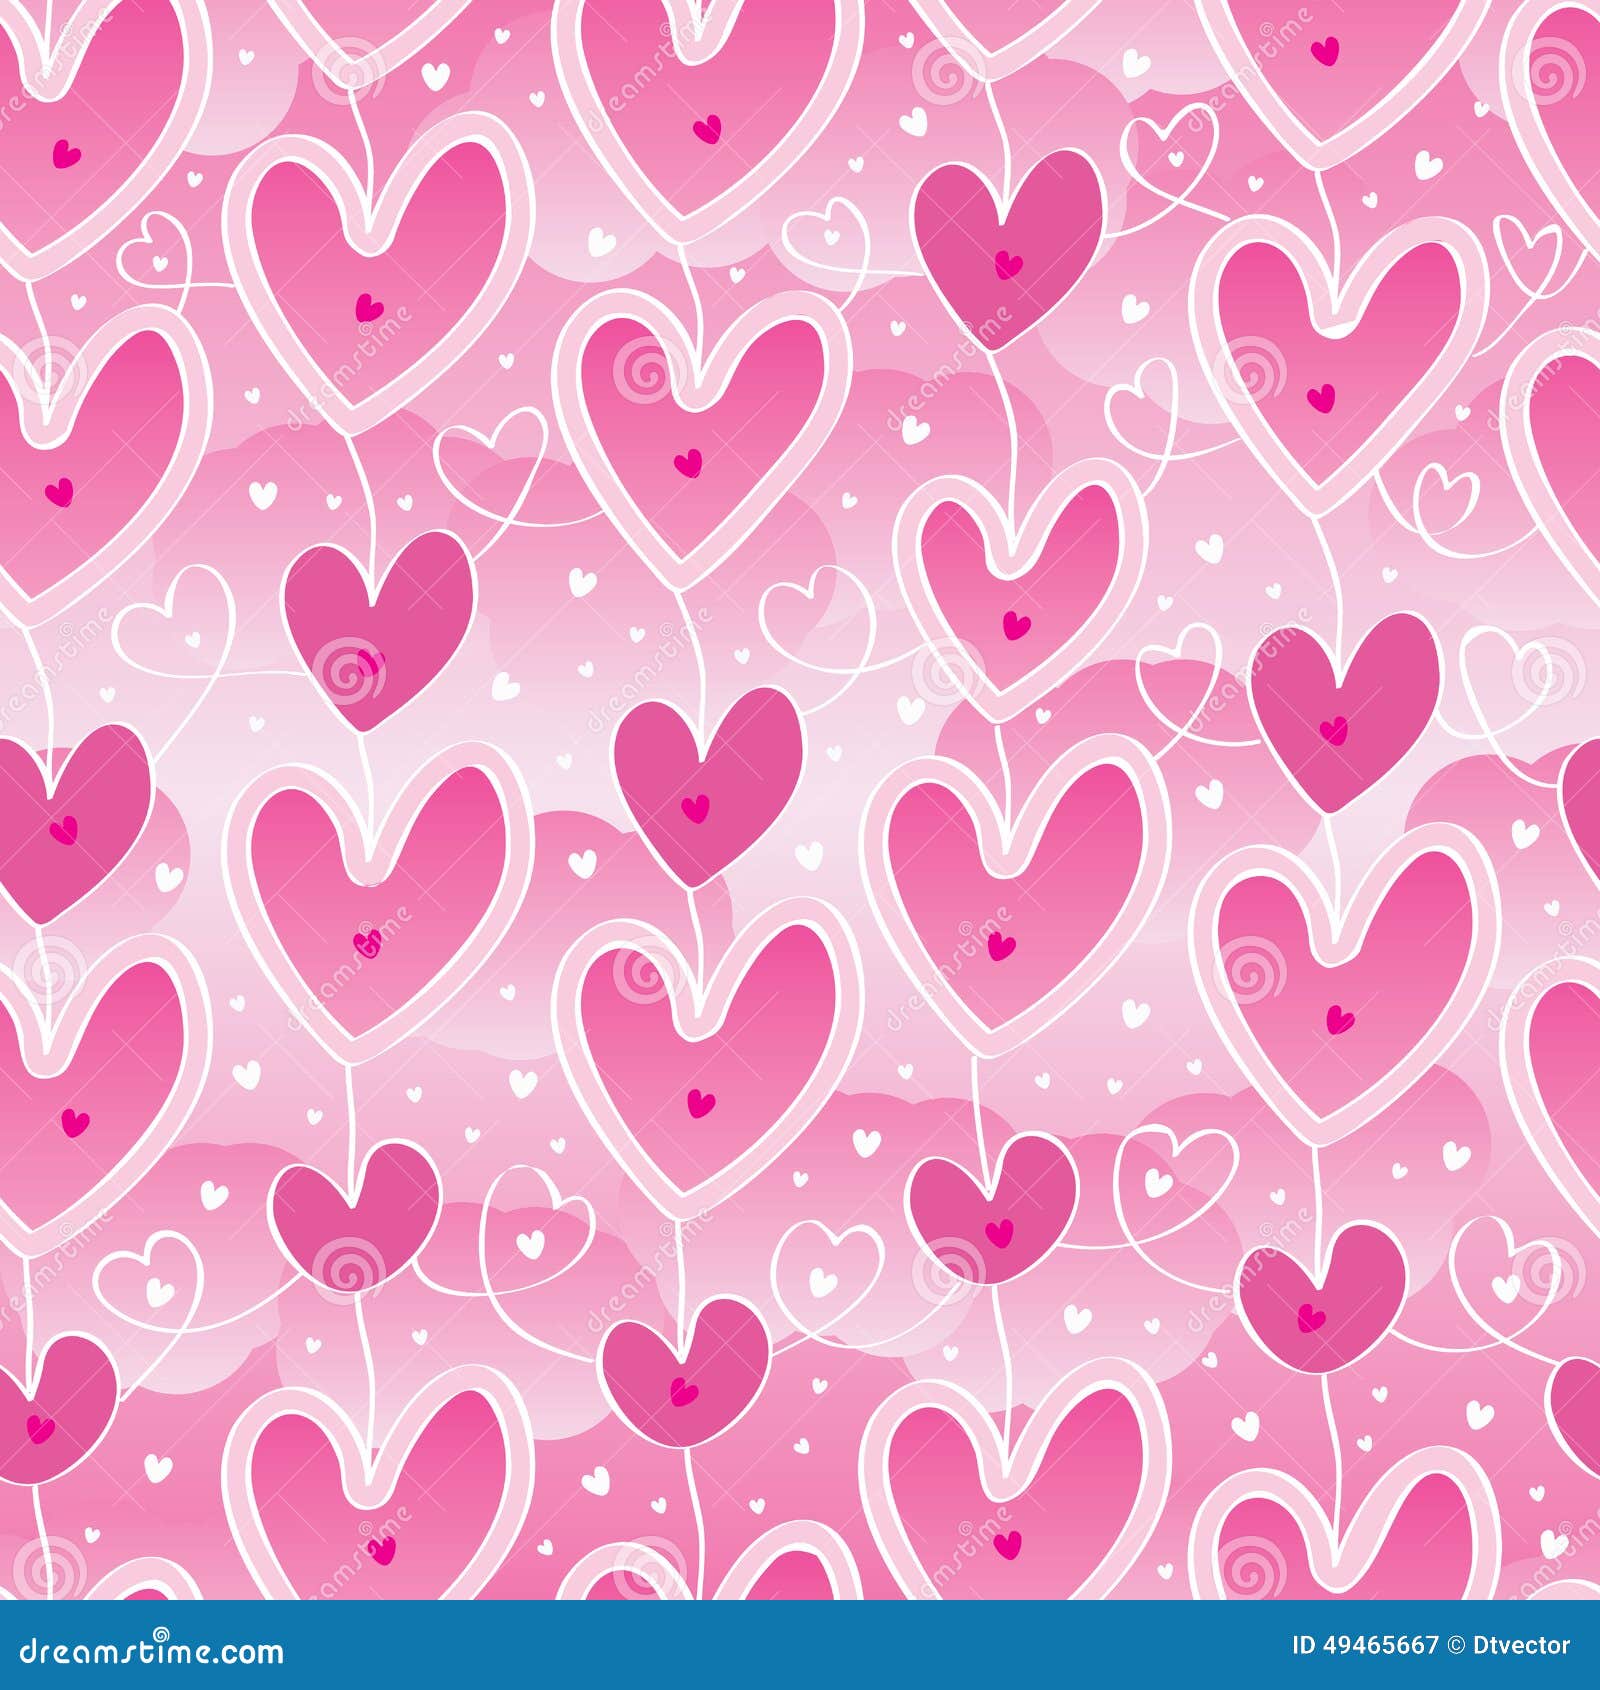 love hang sky pink seamless pattern